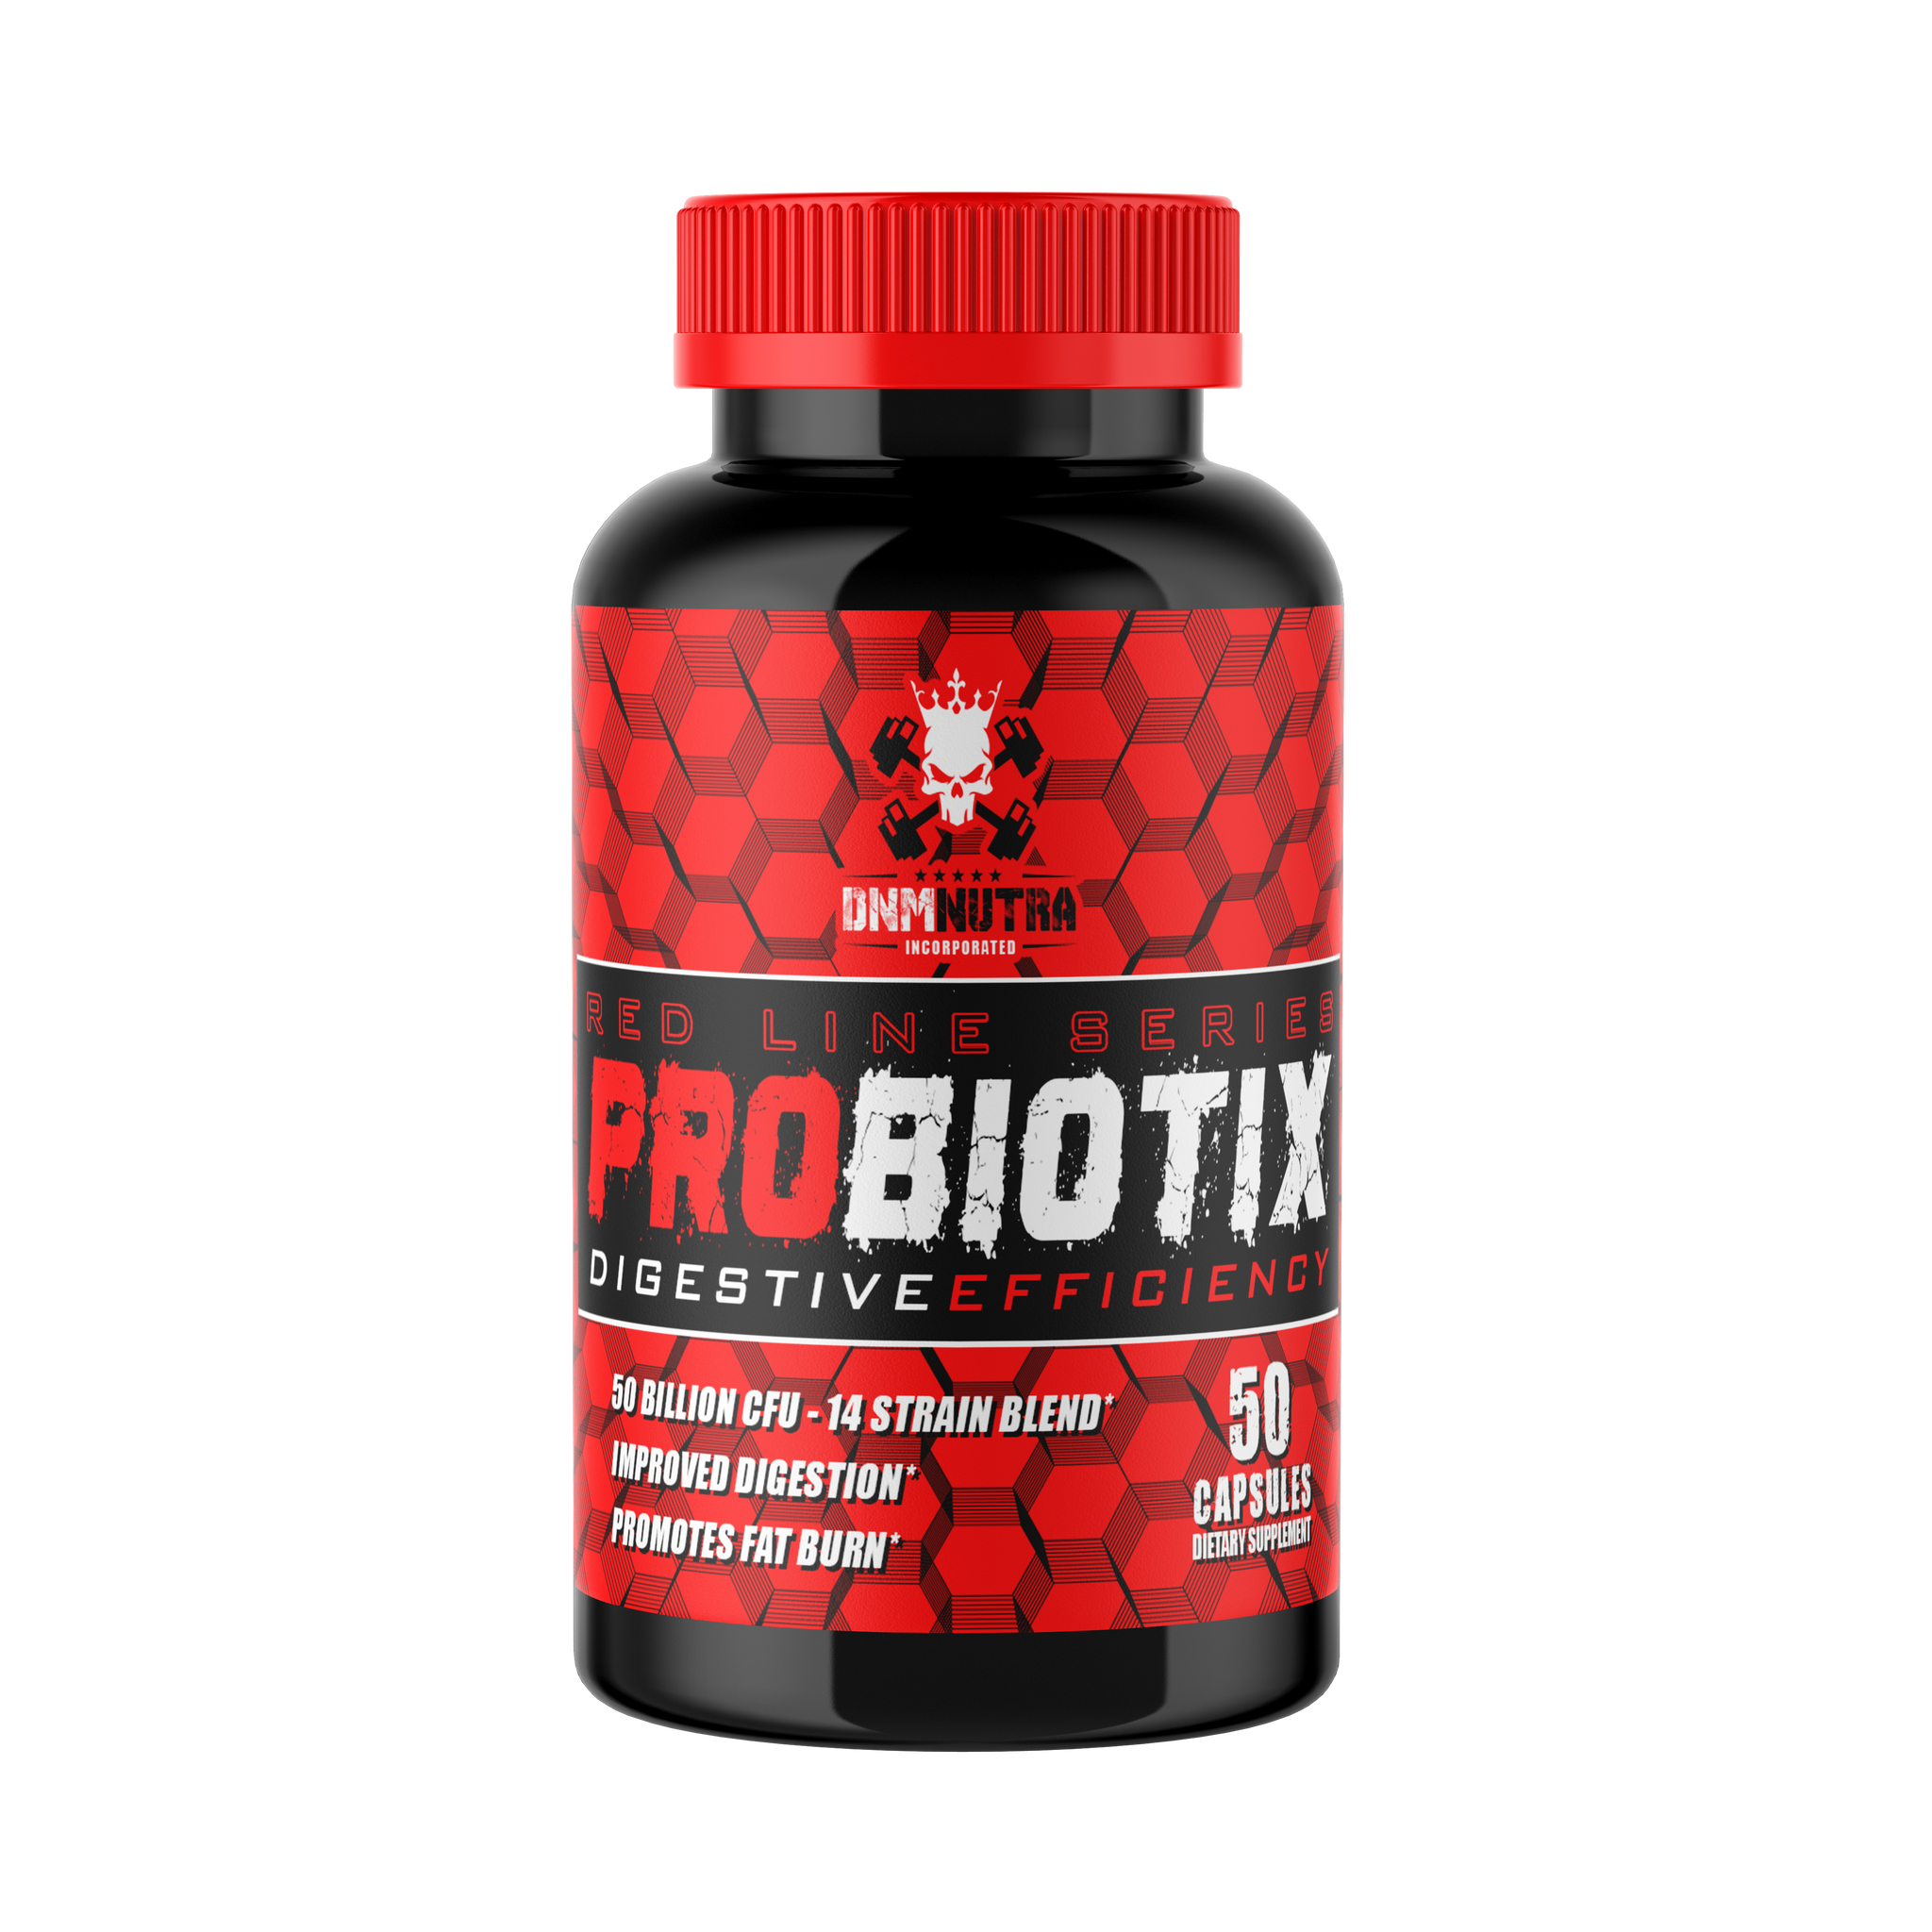 Probiotix - Digestive Efficiency